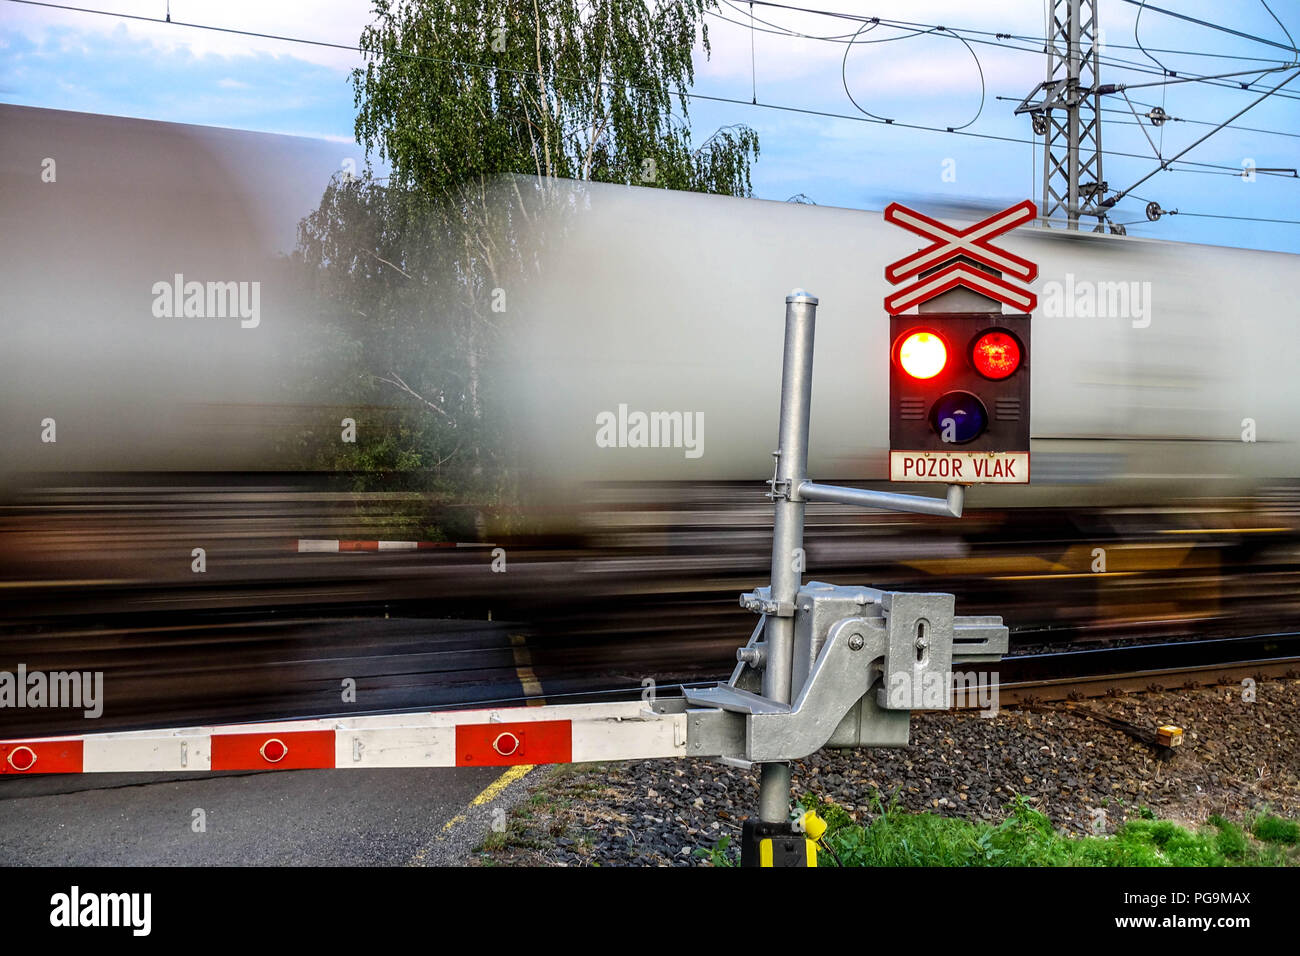 Ceske drahy, Czech railways, Cargo train passing a railroad crossing with red traffic lights flashing, Czech Republic Train, Europe Stock Photo